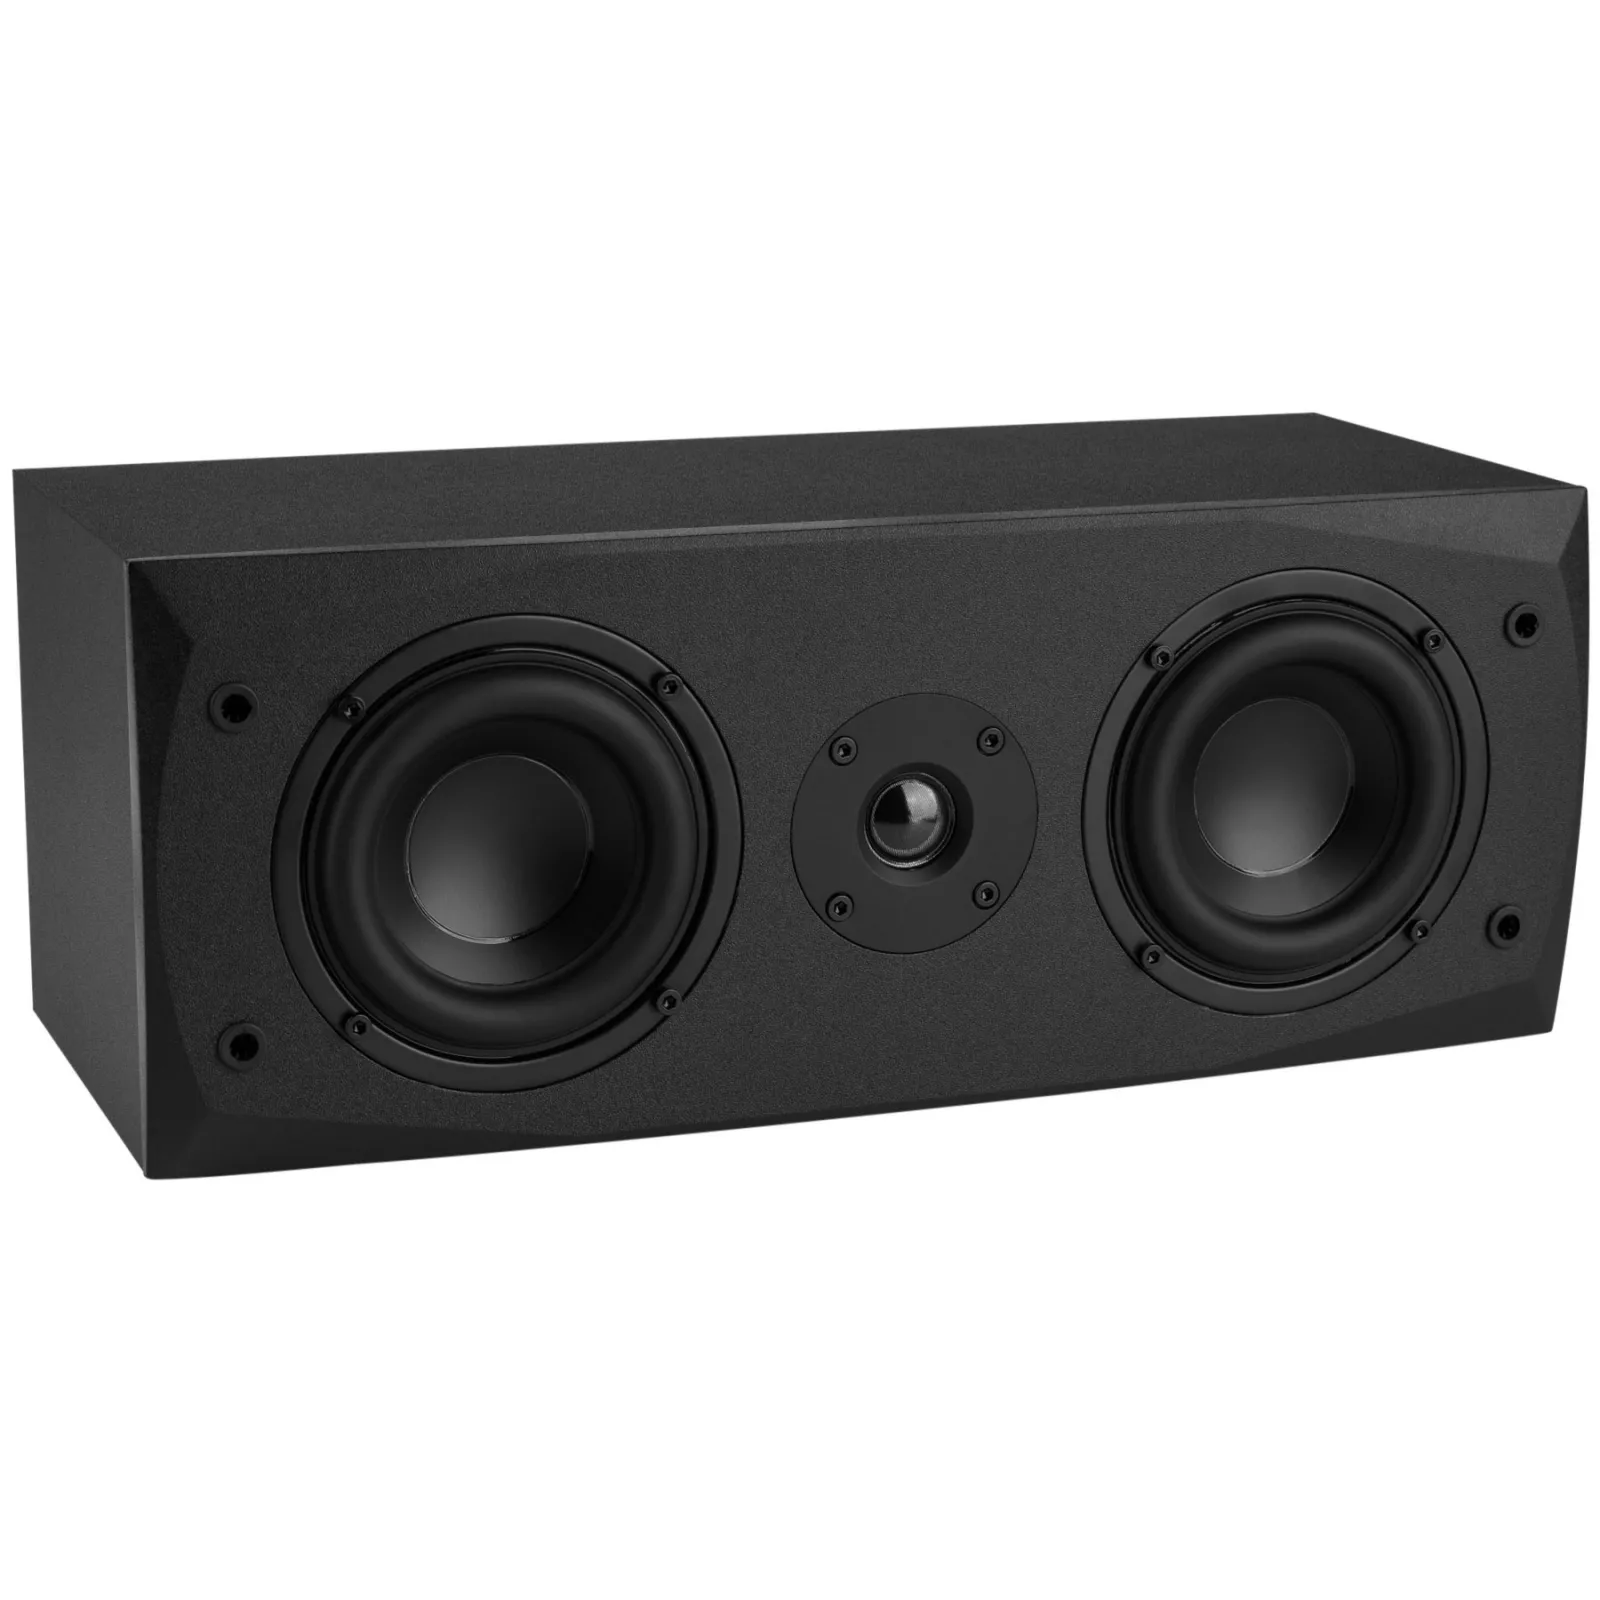 Boxa de centru Dayton Audio MK442 Black, [],audioclub.ro